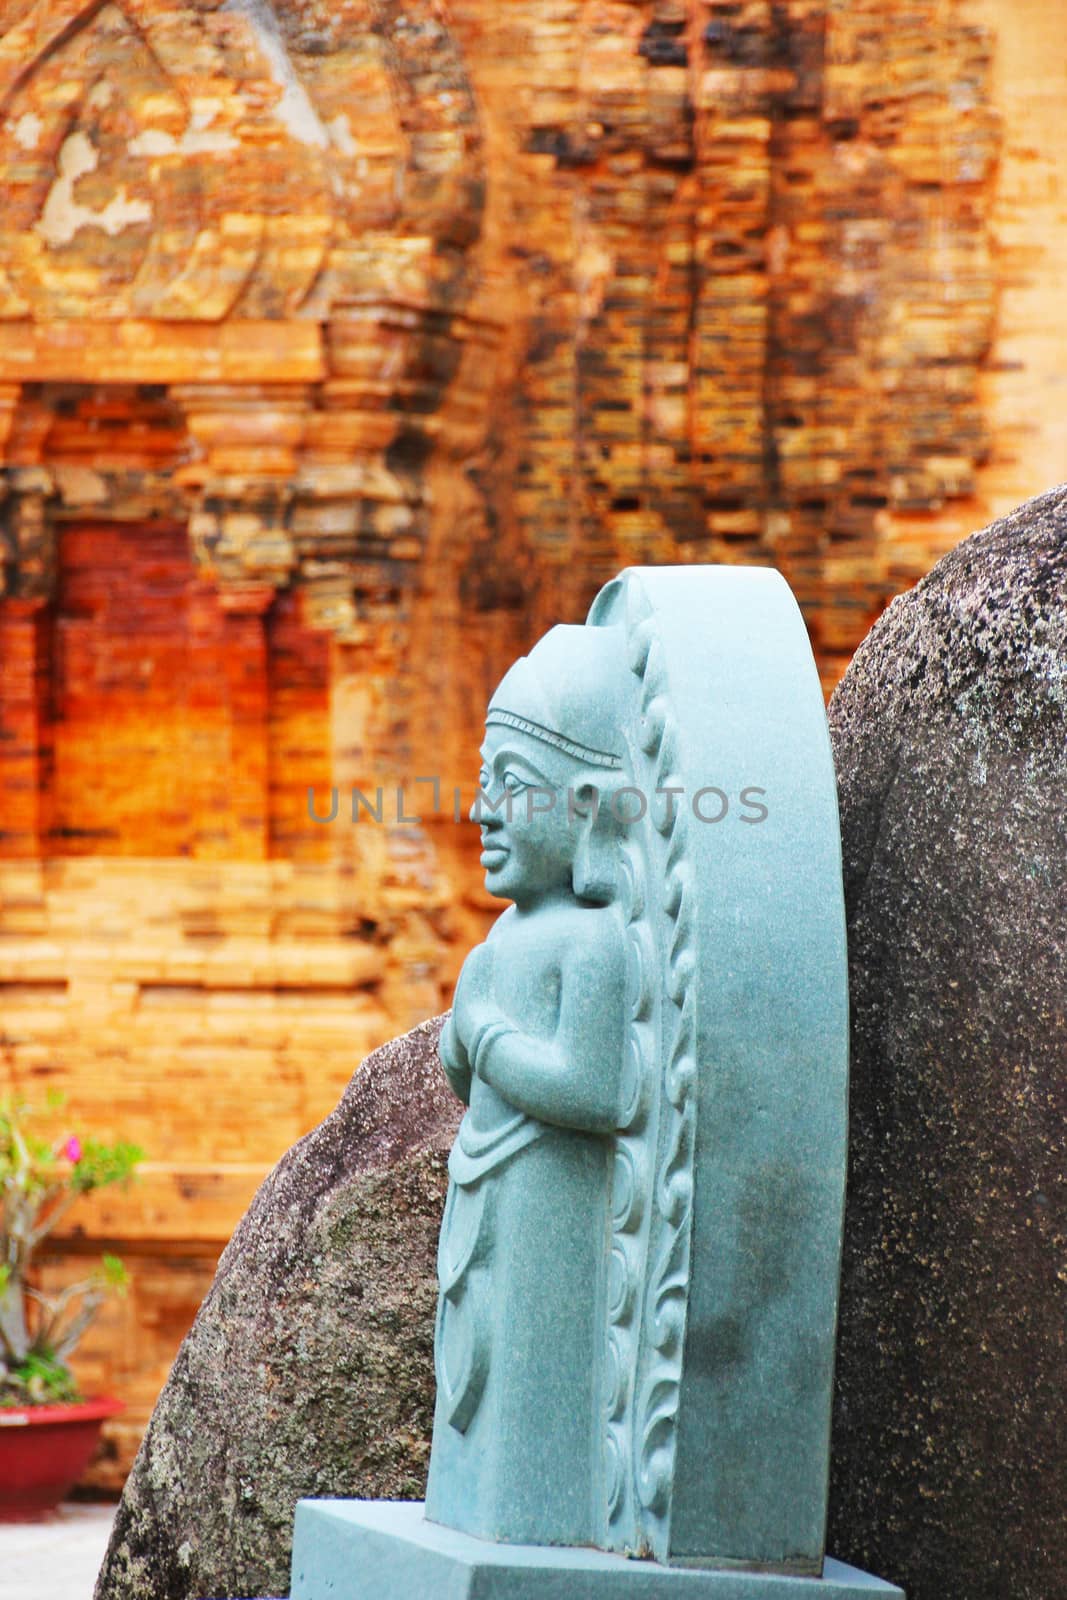 Statuette in Po Nagar Cham hindu temple in Vietnam by tboyajiev